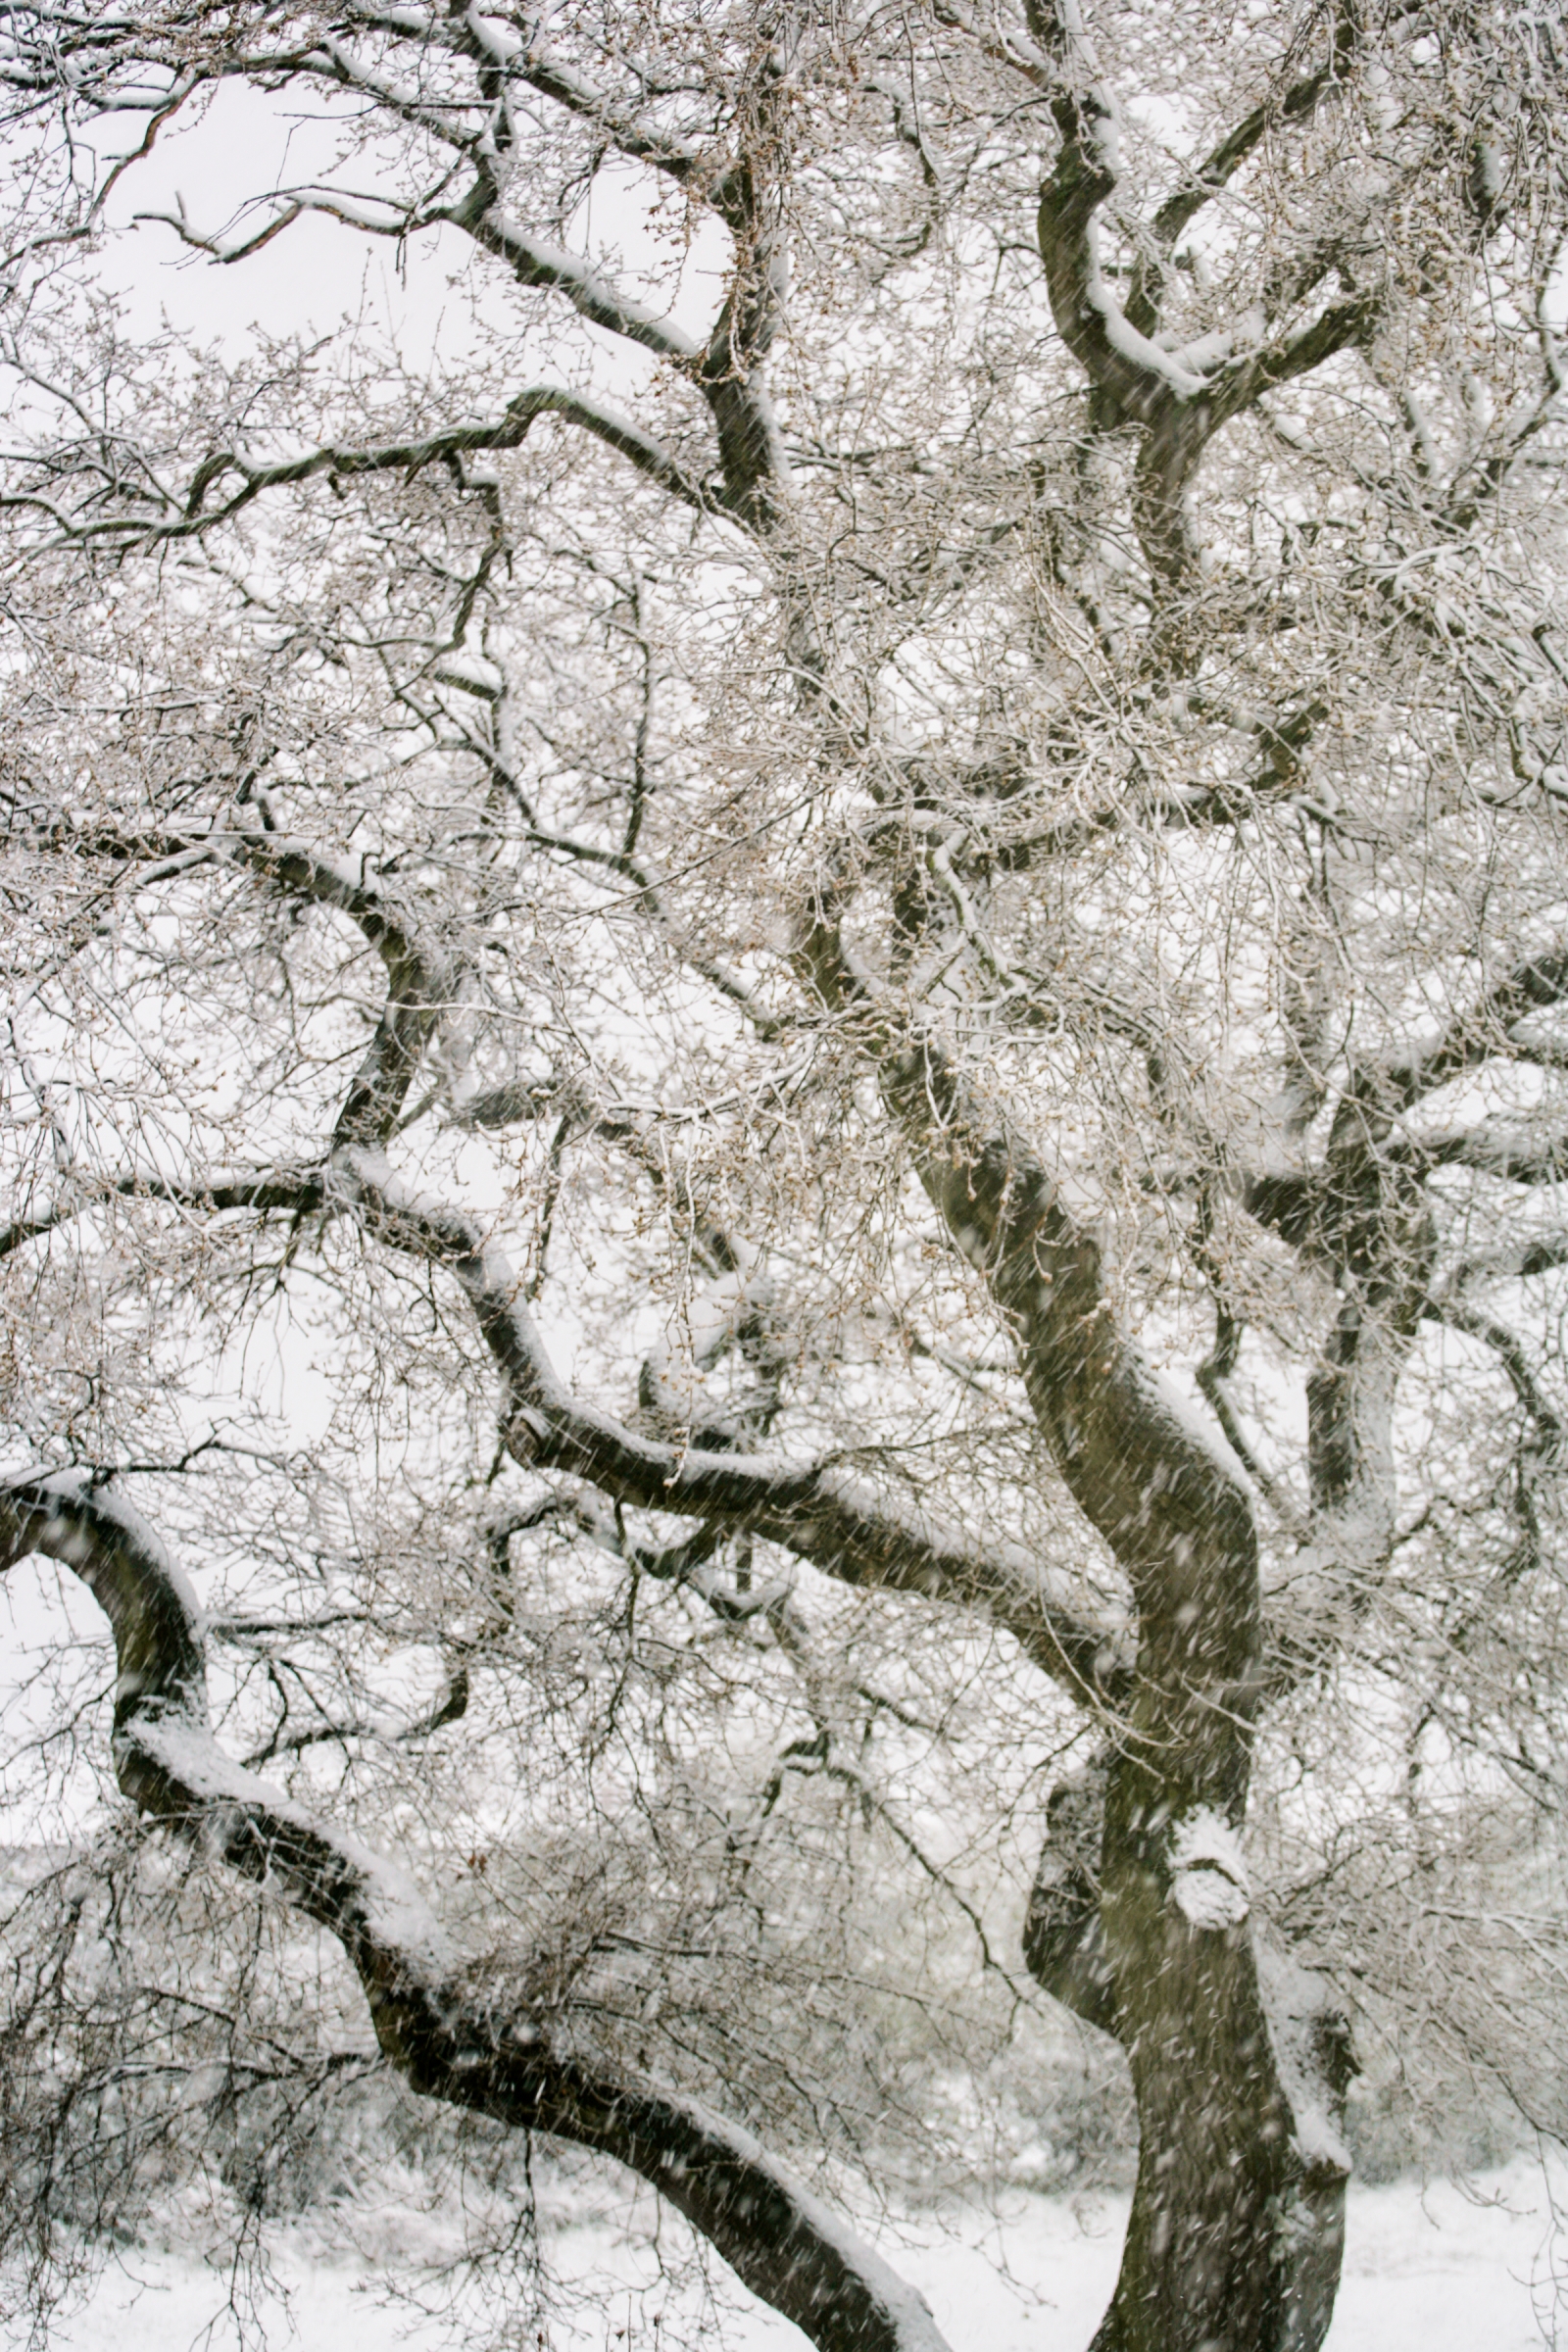 Snowy tree, image by Paul Hunter